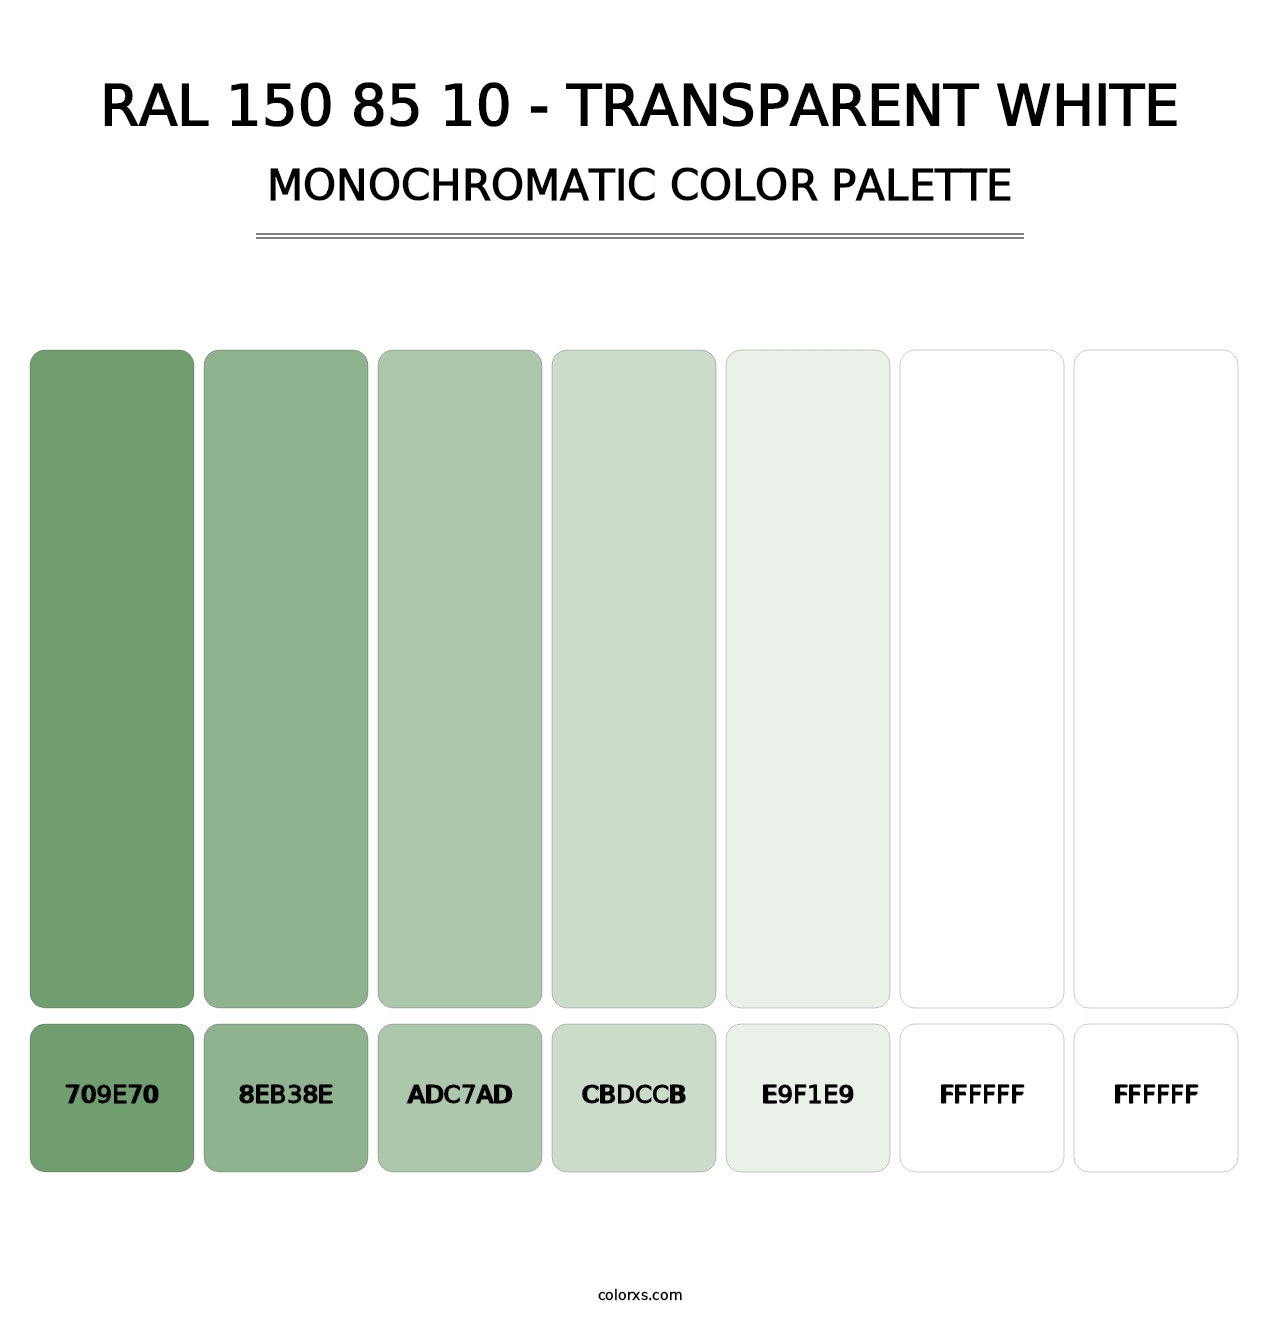 RAL 150 85 10 - Transparent White - Monochromatic Color Palette